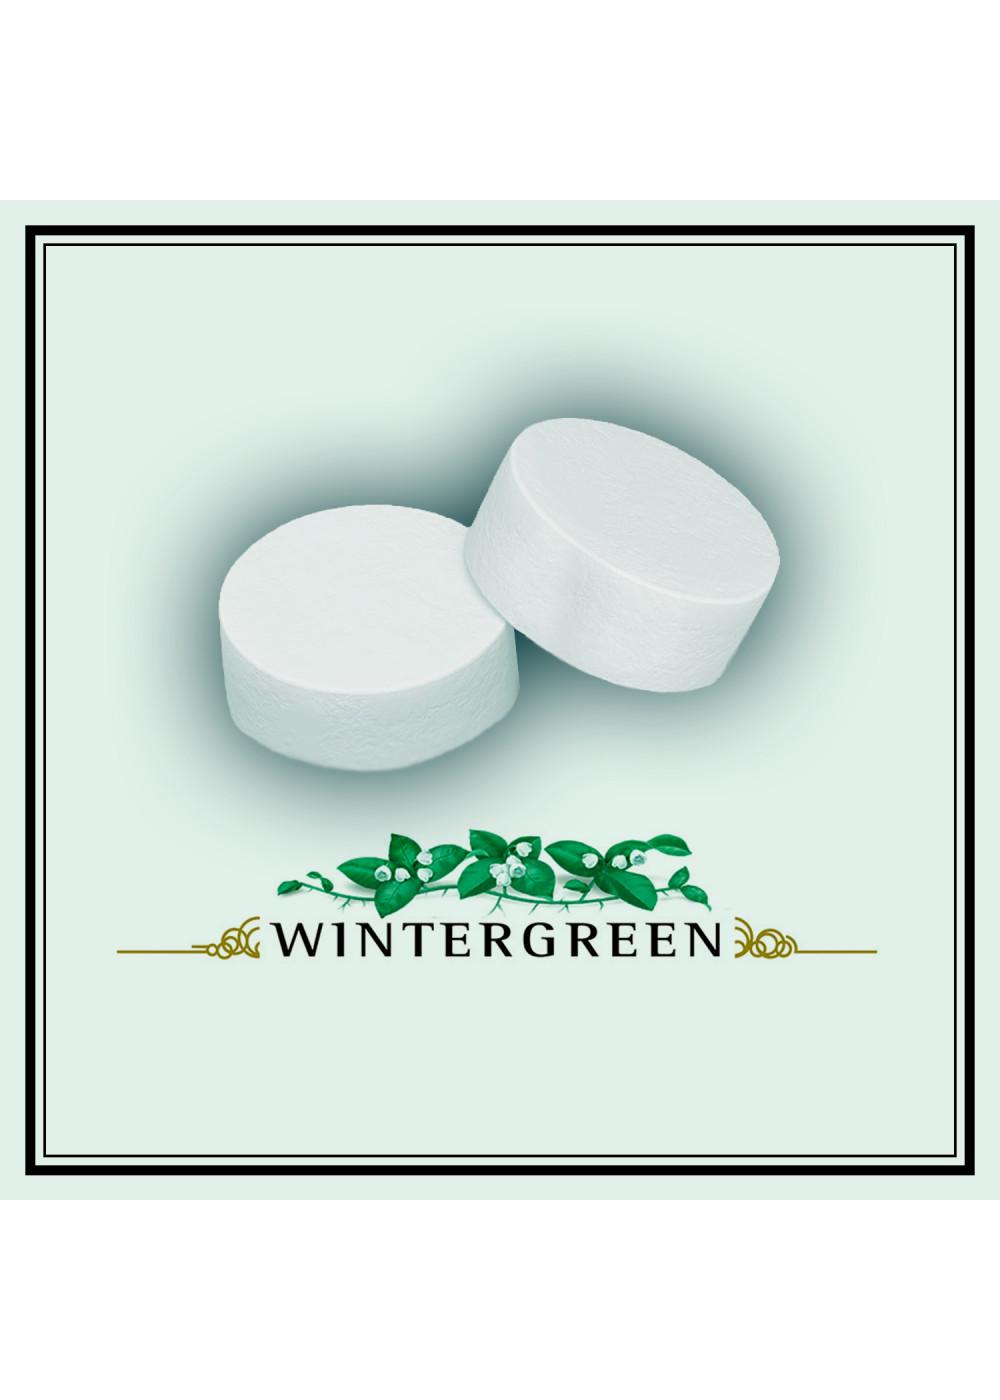 Altoids Wintergreen Sugar Free Breath Mints; image 6 of 7